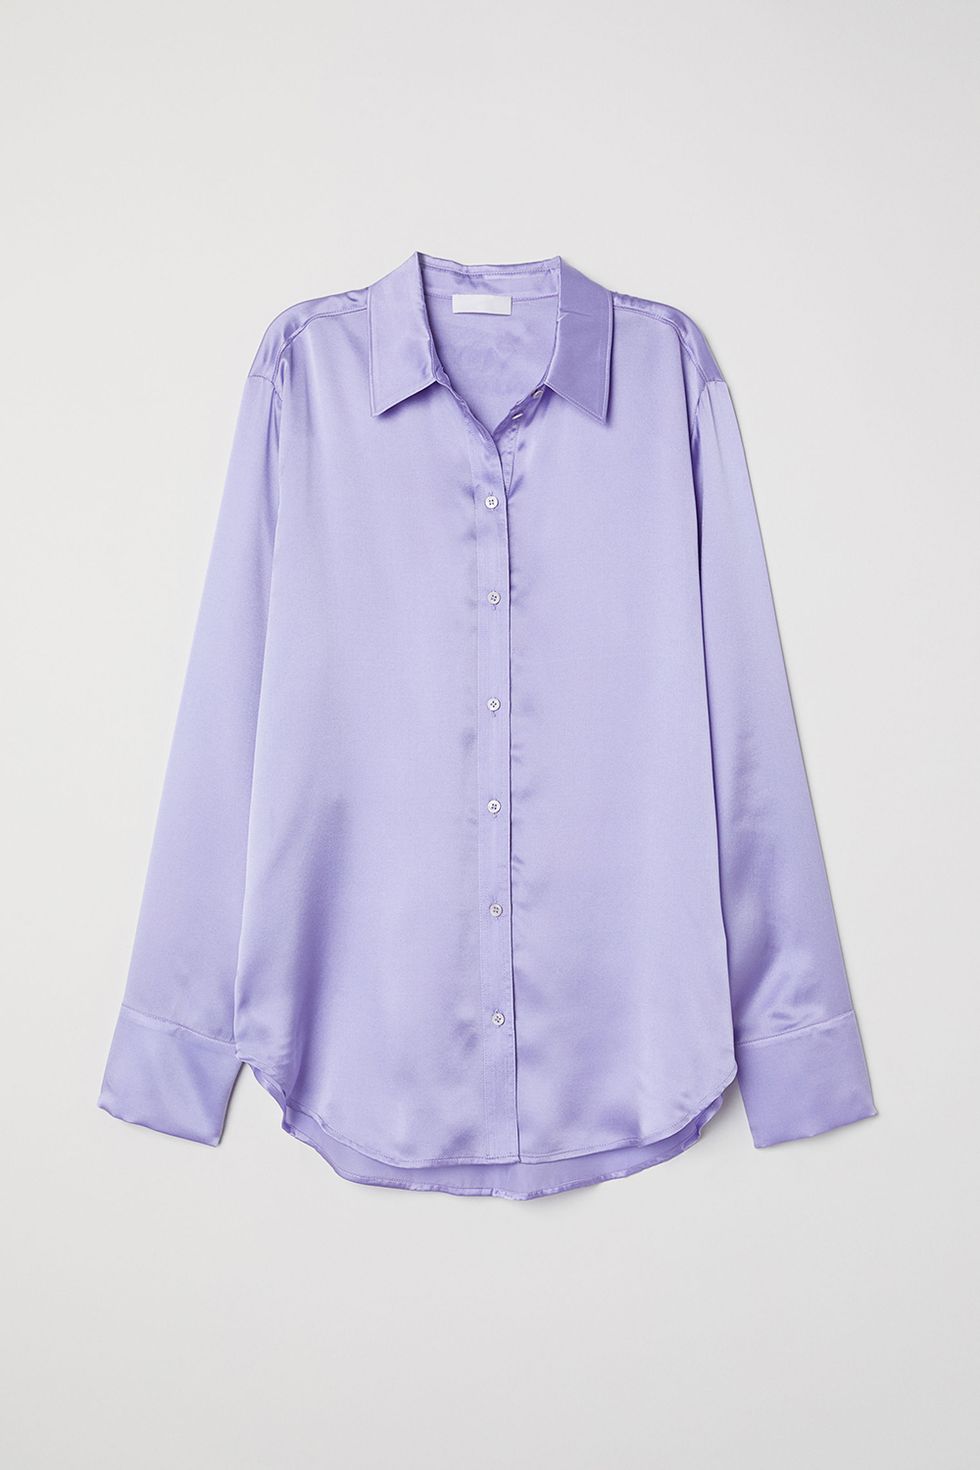 Clothing, White, Purple, Violet, Lavender, Sleeve, Lilac, Collar, Shirt, Blouse, 